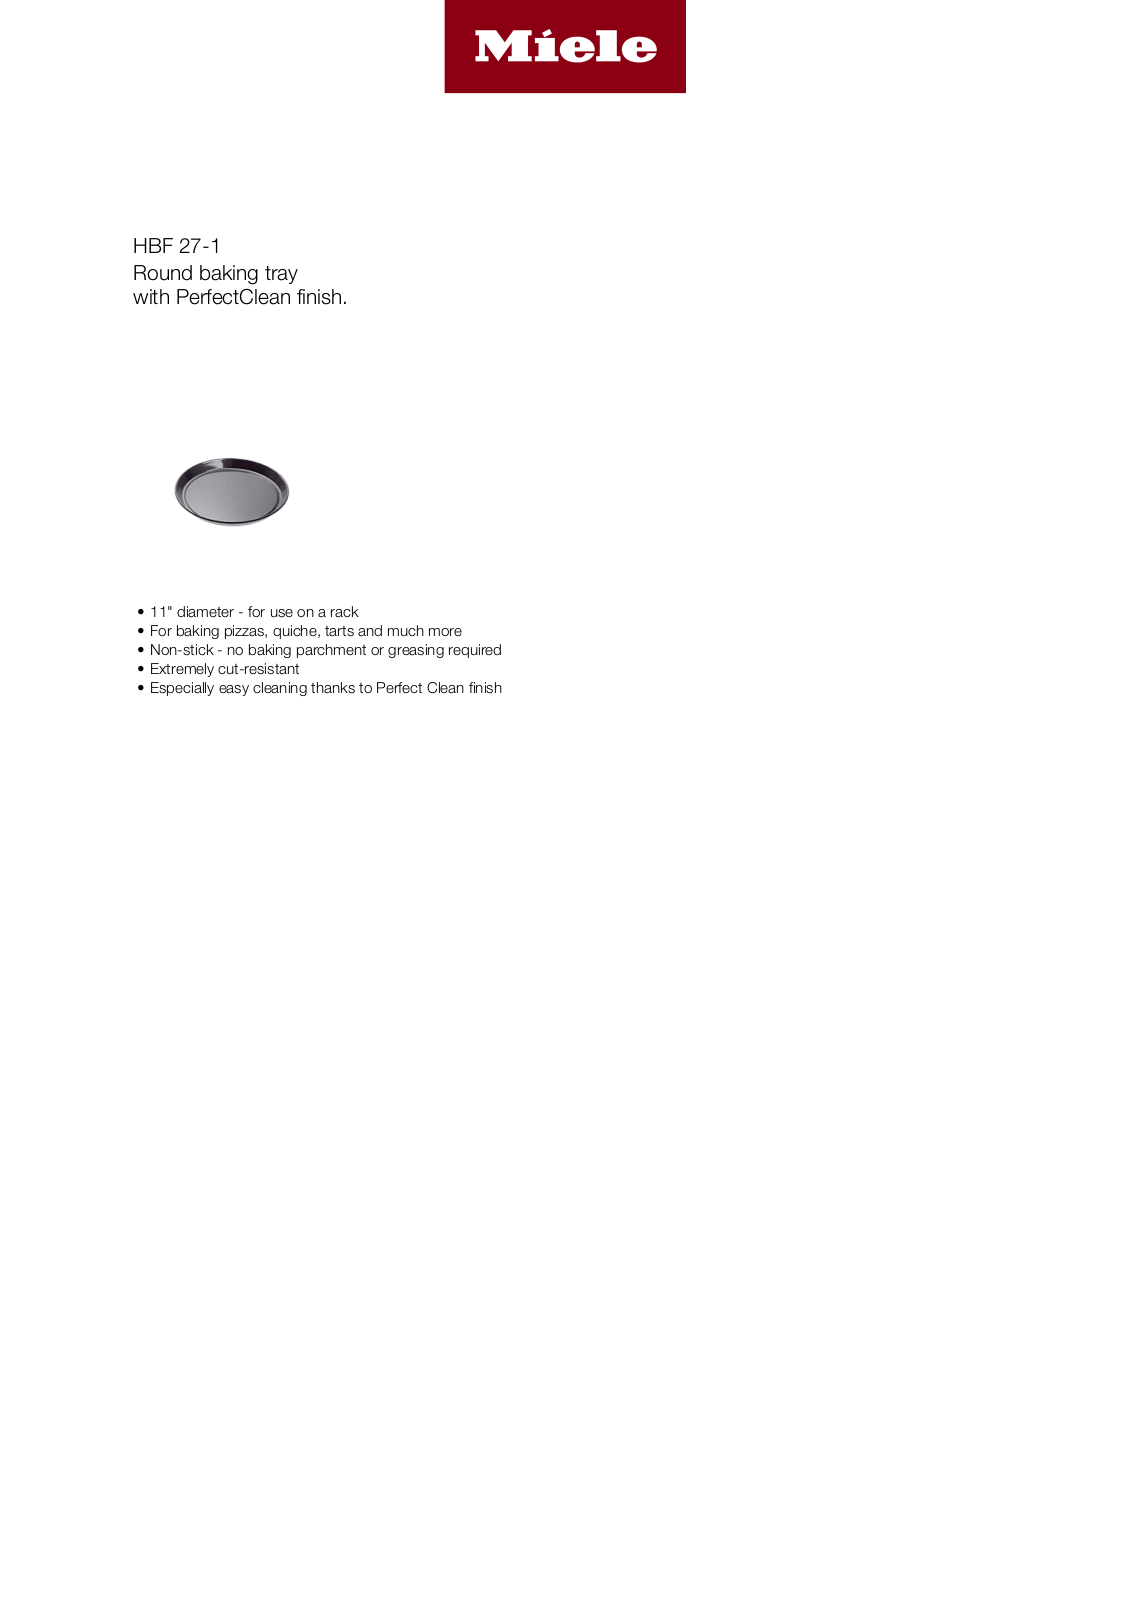 Miele HBF 27-1 Product Sheet